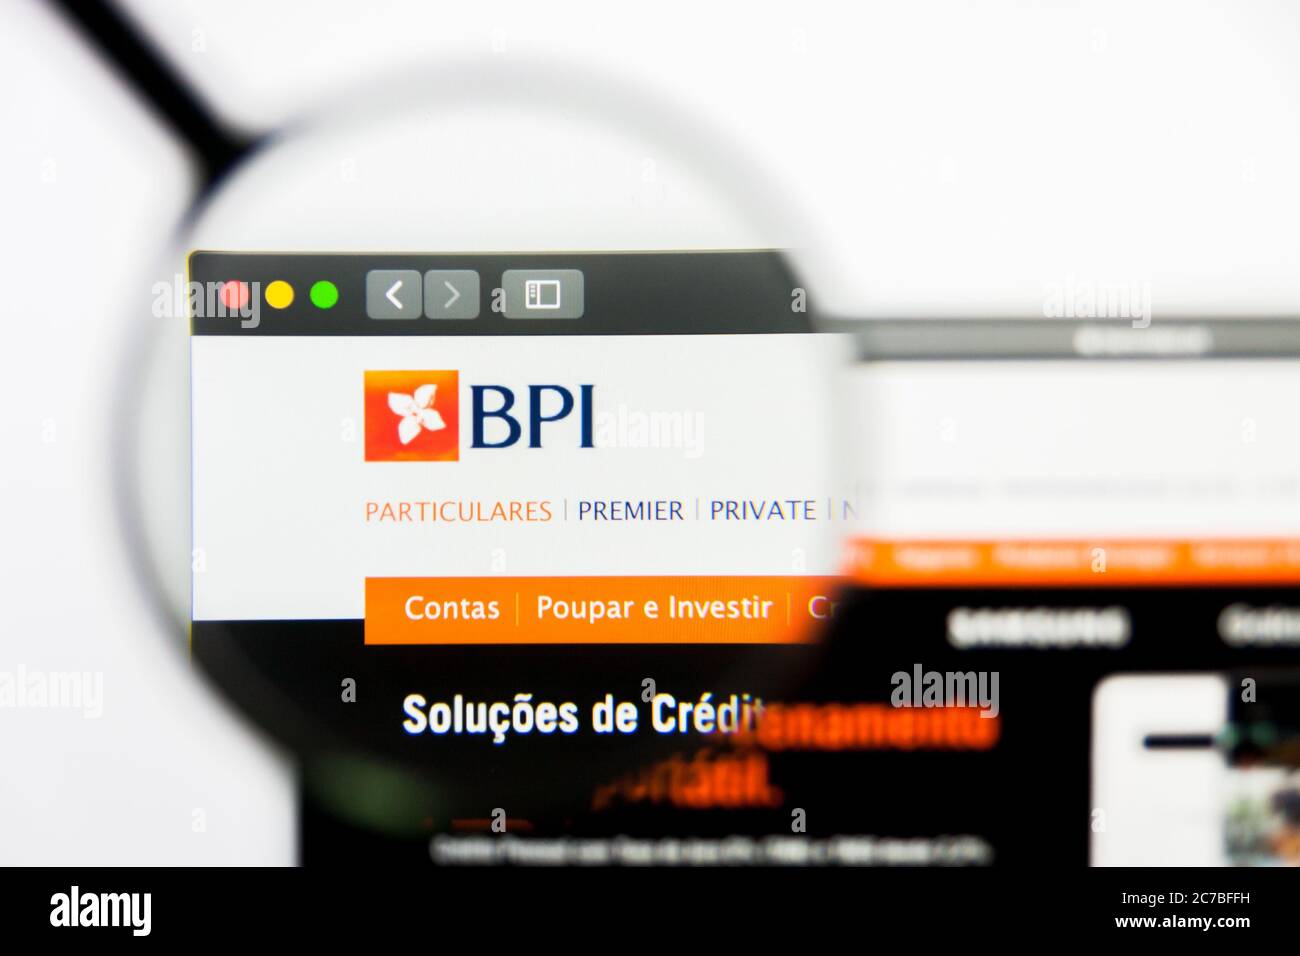 Los Angeles, California, USA - 24 March 2019: Illustrative Editorial of Banco BPI website homepage. Banco BPI logo visible on display screen. Stock Photo